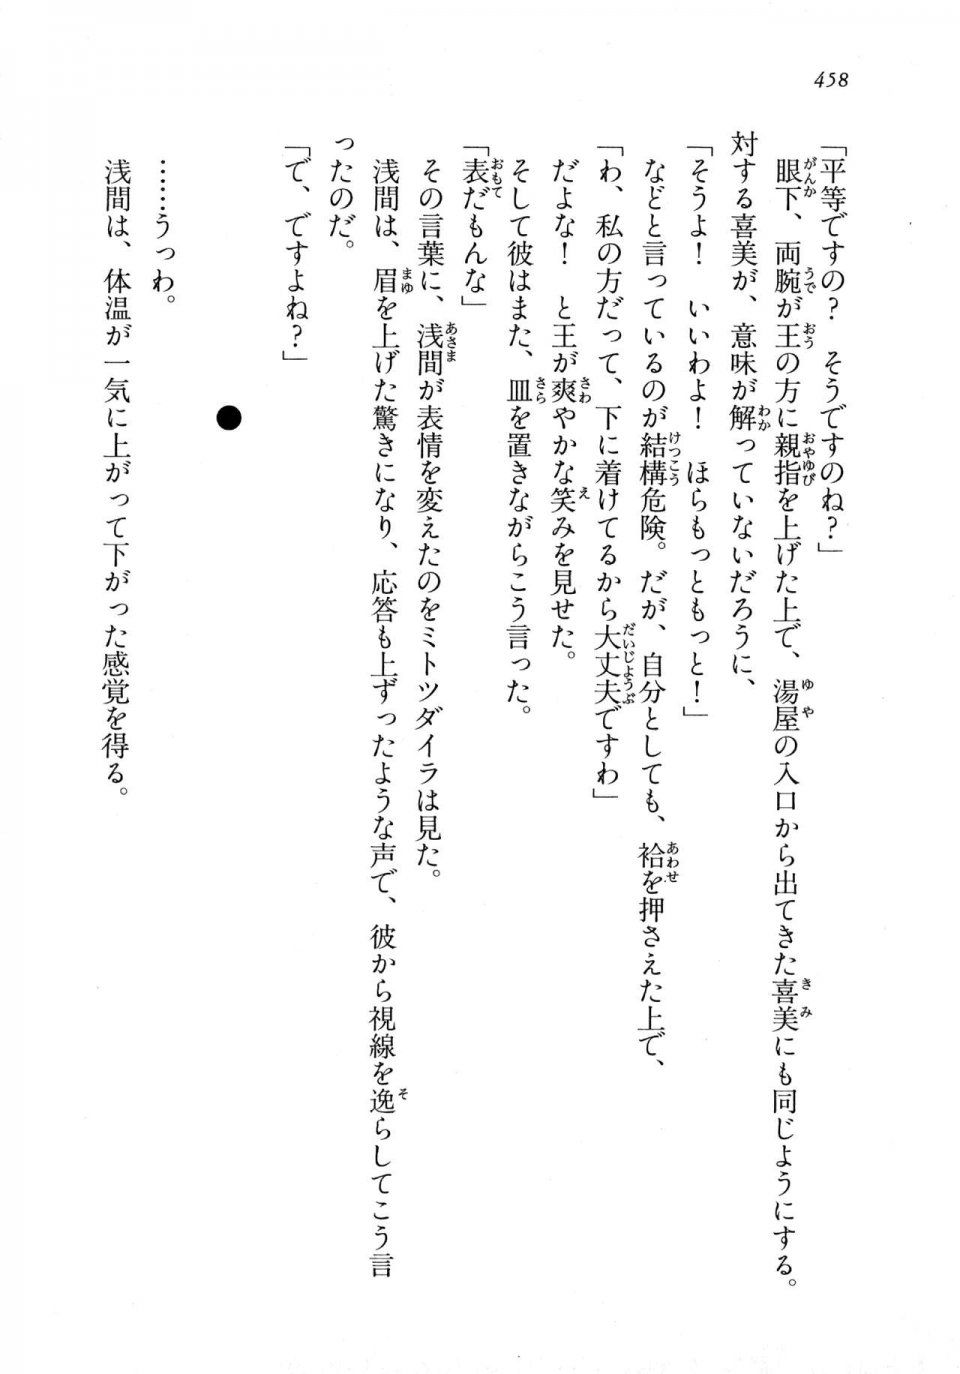 Kyoukai Senjou no Horizon LN Vol 18(7C) Part 1 - Photo #458